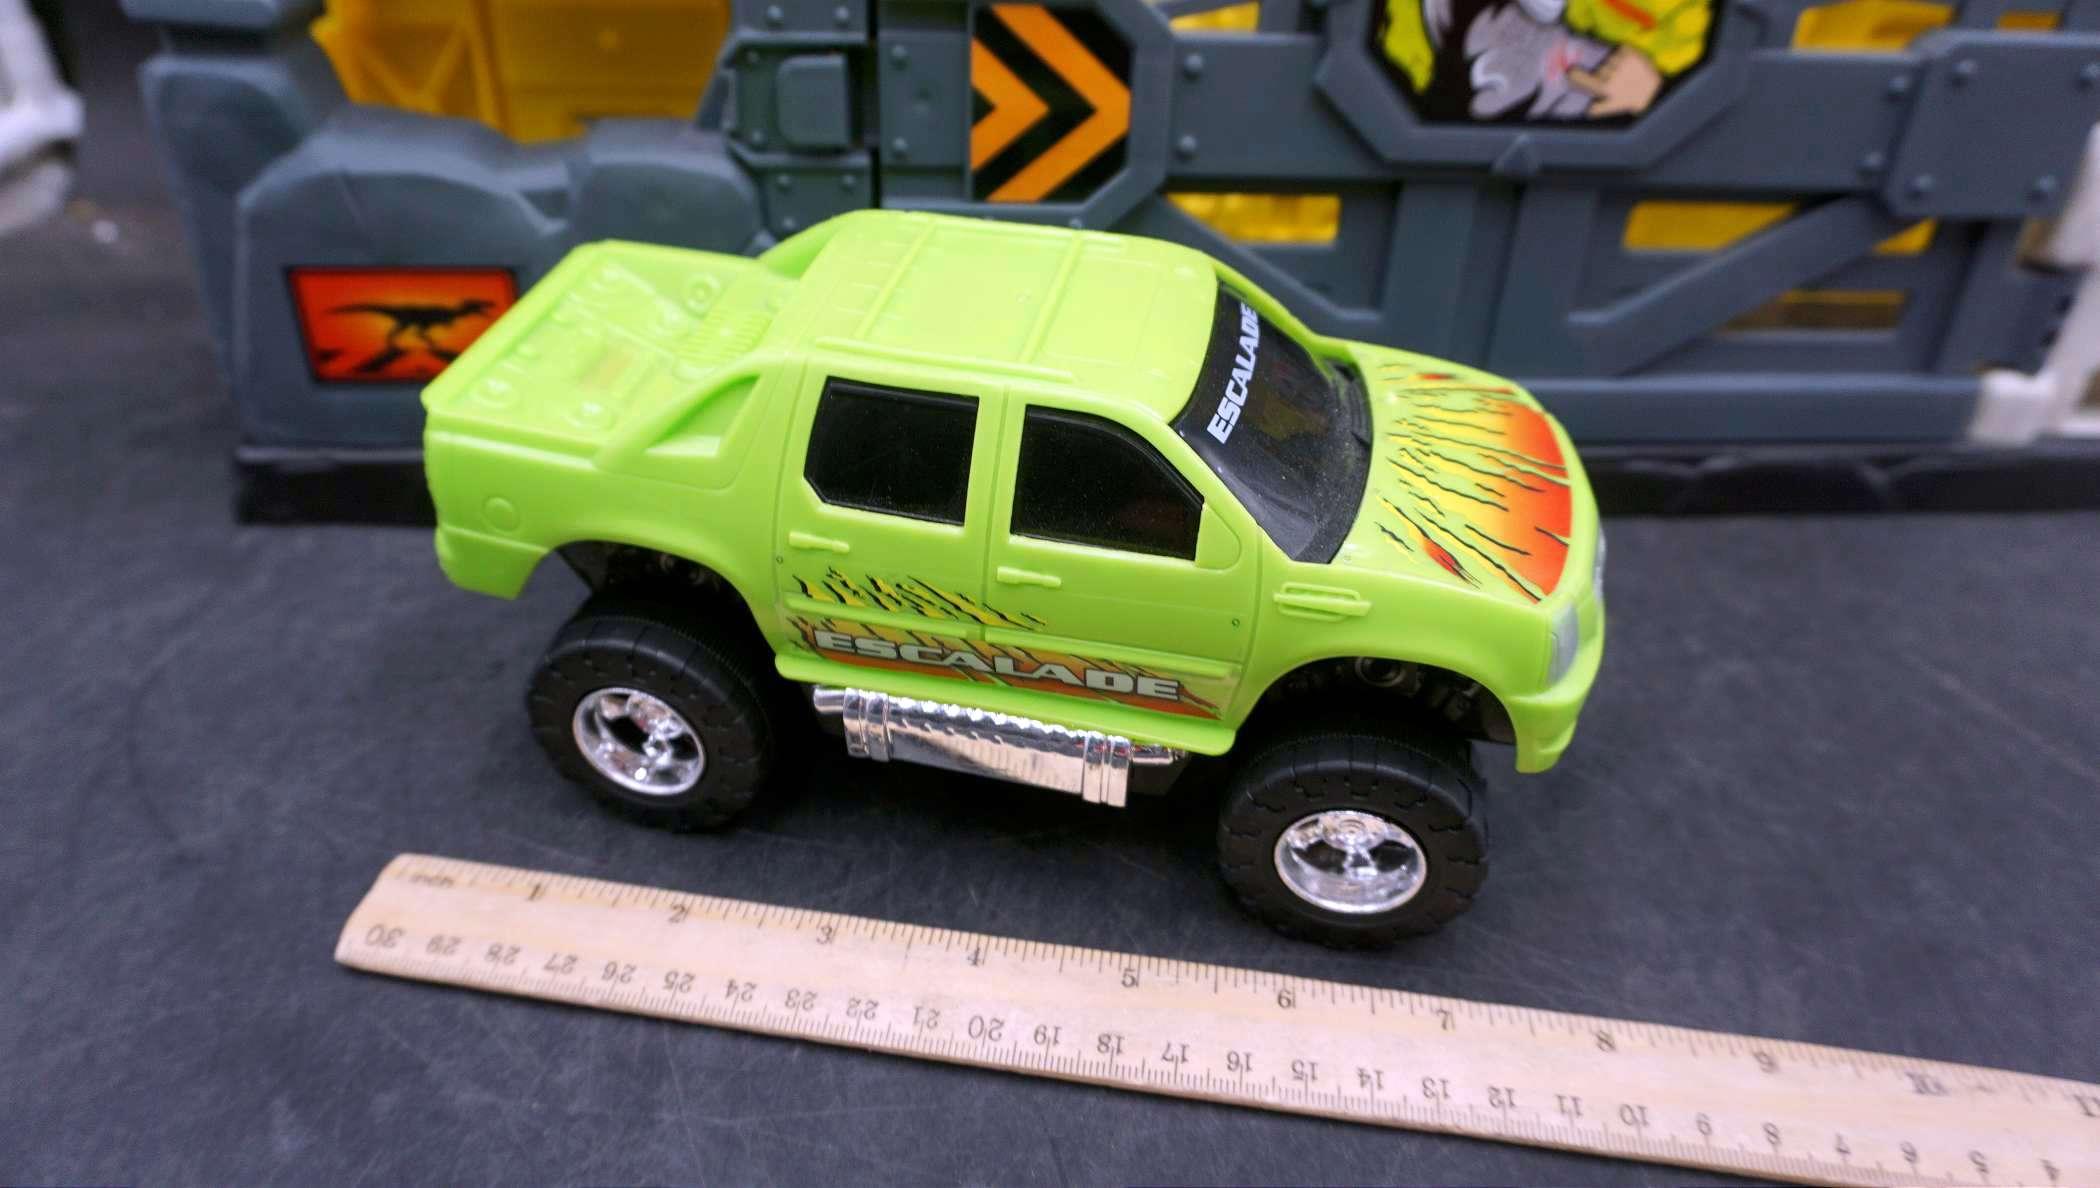 Dinosaur Park Toy & Escalade Pickup